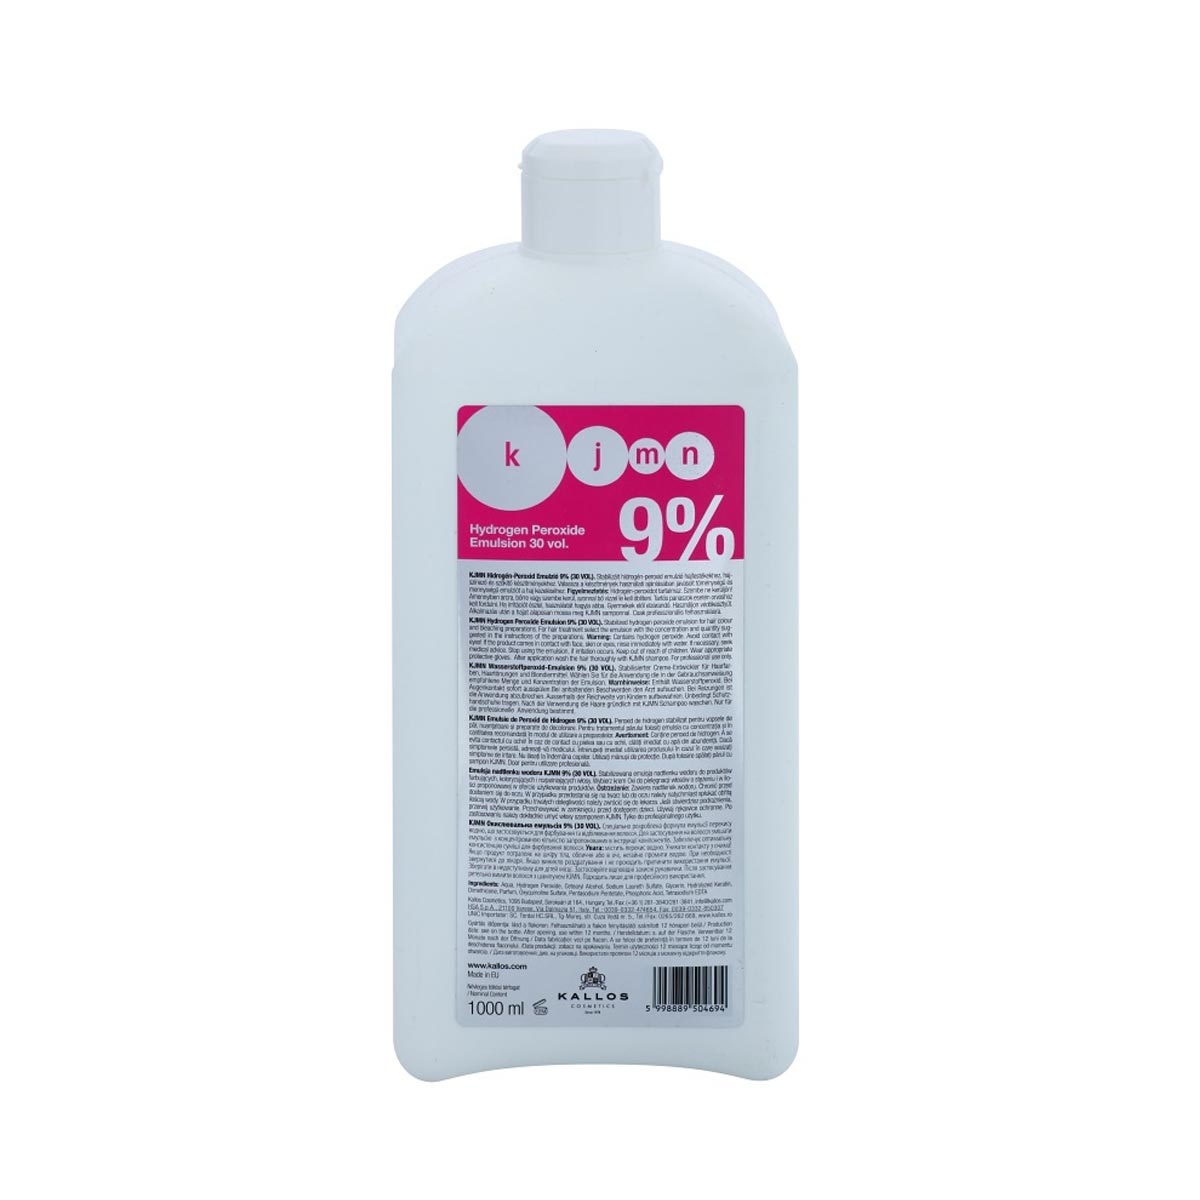 Kallos (KJMN) krémový oxidant neparfumovaný 9% - 1000 ml